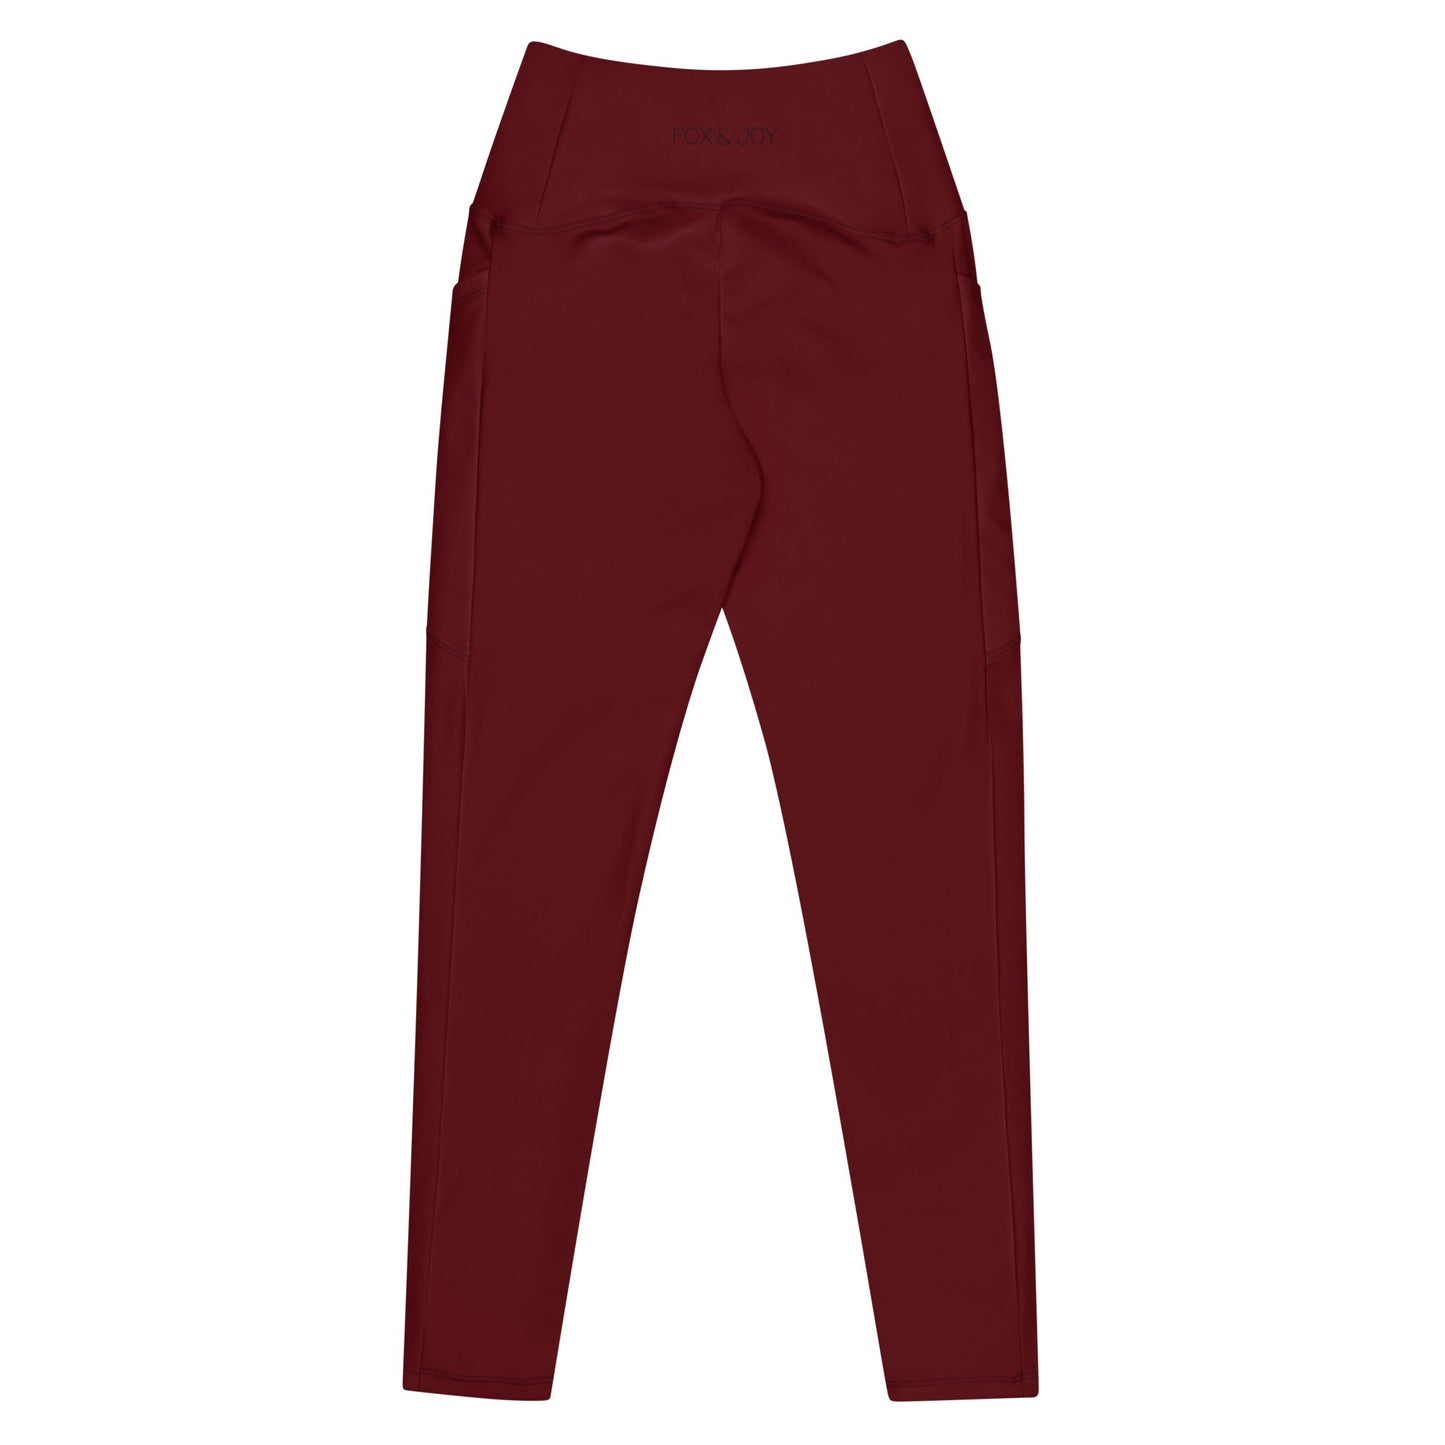 Garnet Red Crossover leggings with pockets - Fox & Joy